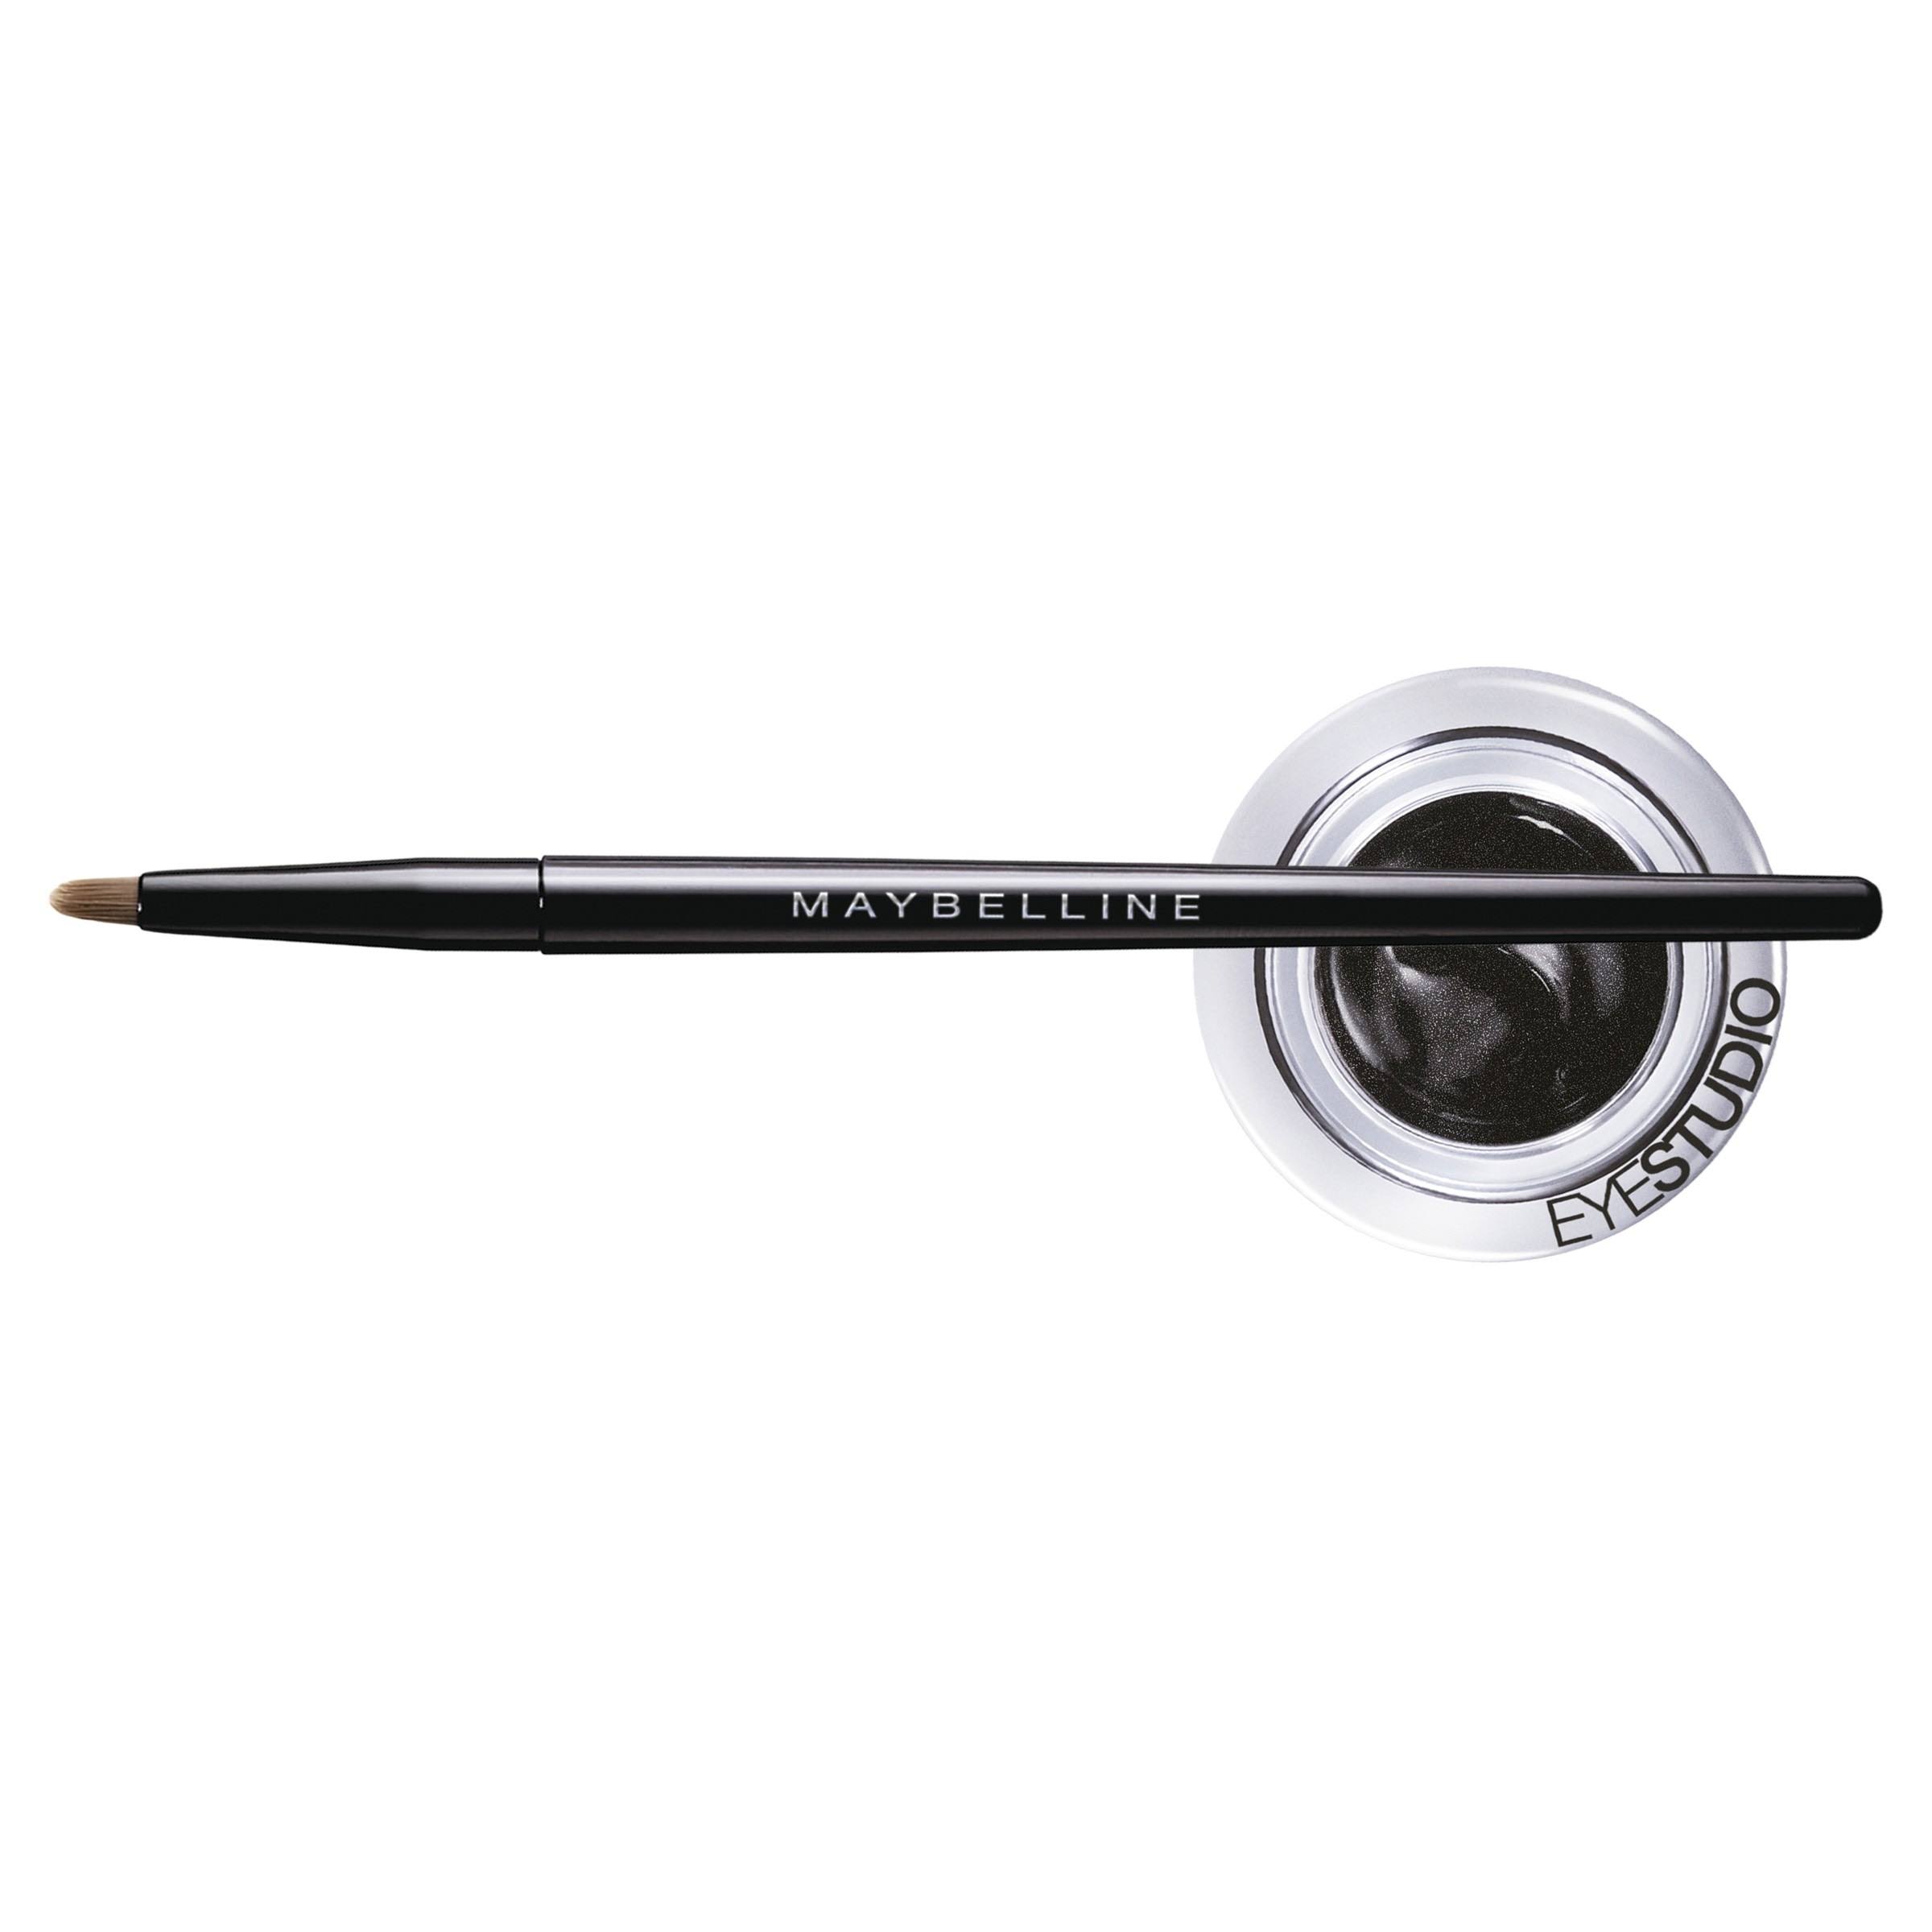 Maybelline Lasting Drama By EyeStudio Gel Eyeliner - 950 Blackest Black, 5ml